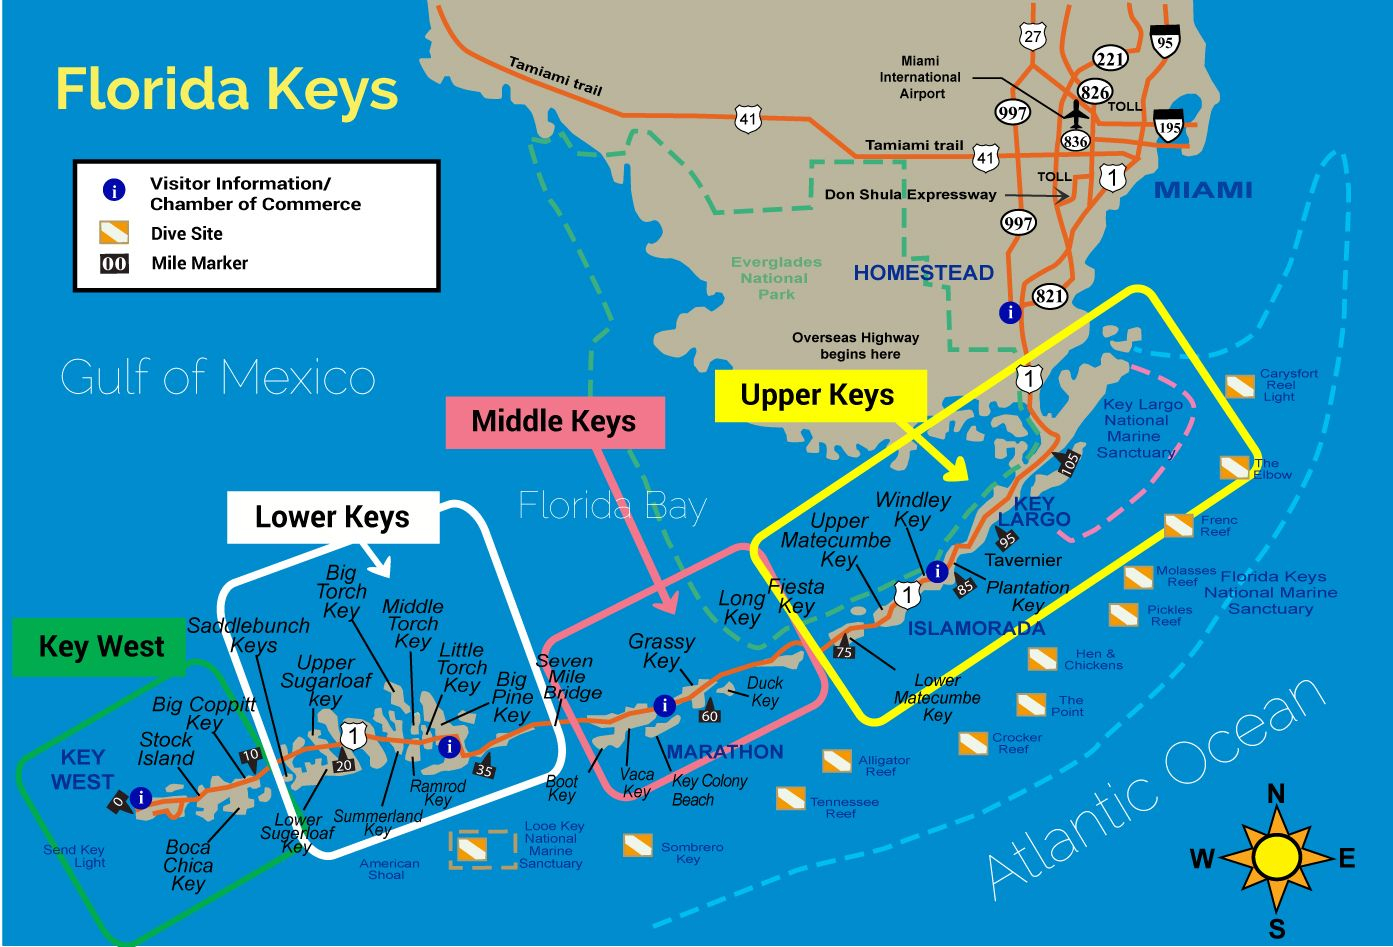 Map Of Areas Servedflorida Keys Vacation Rentals | Vacation - Florida Keys Map Of Beaches